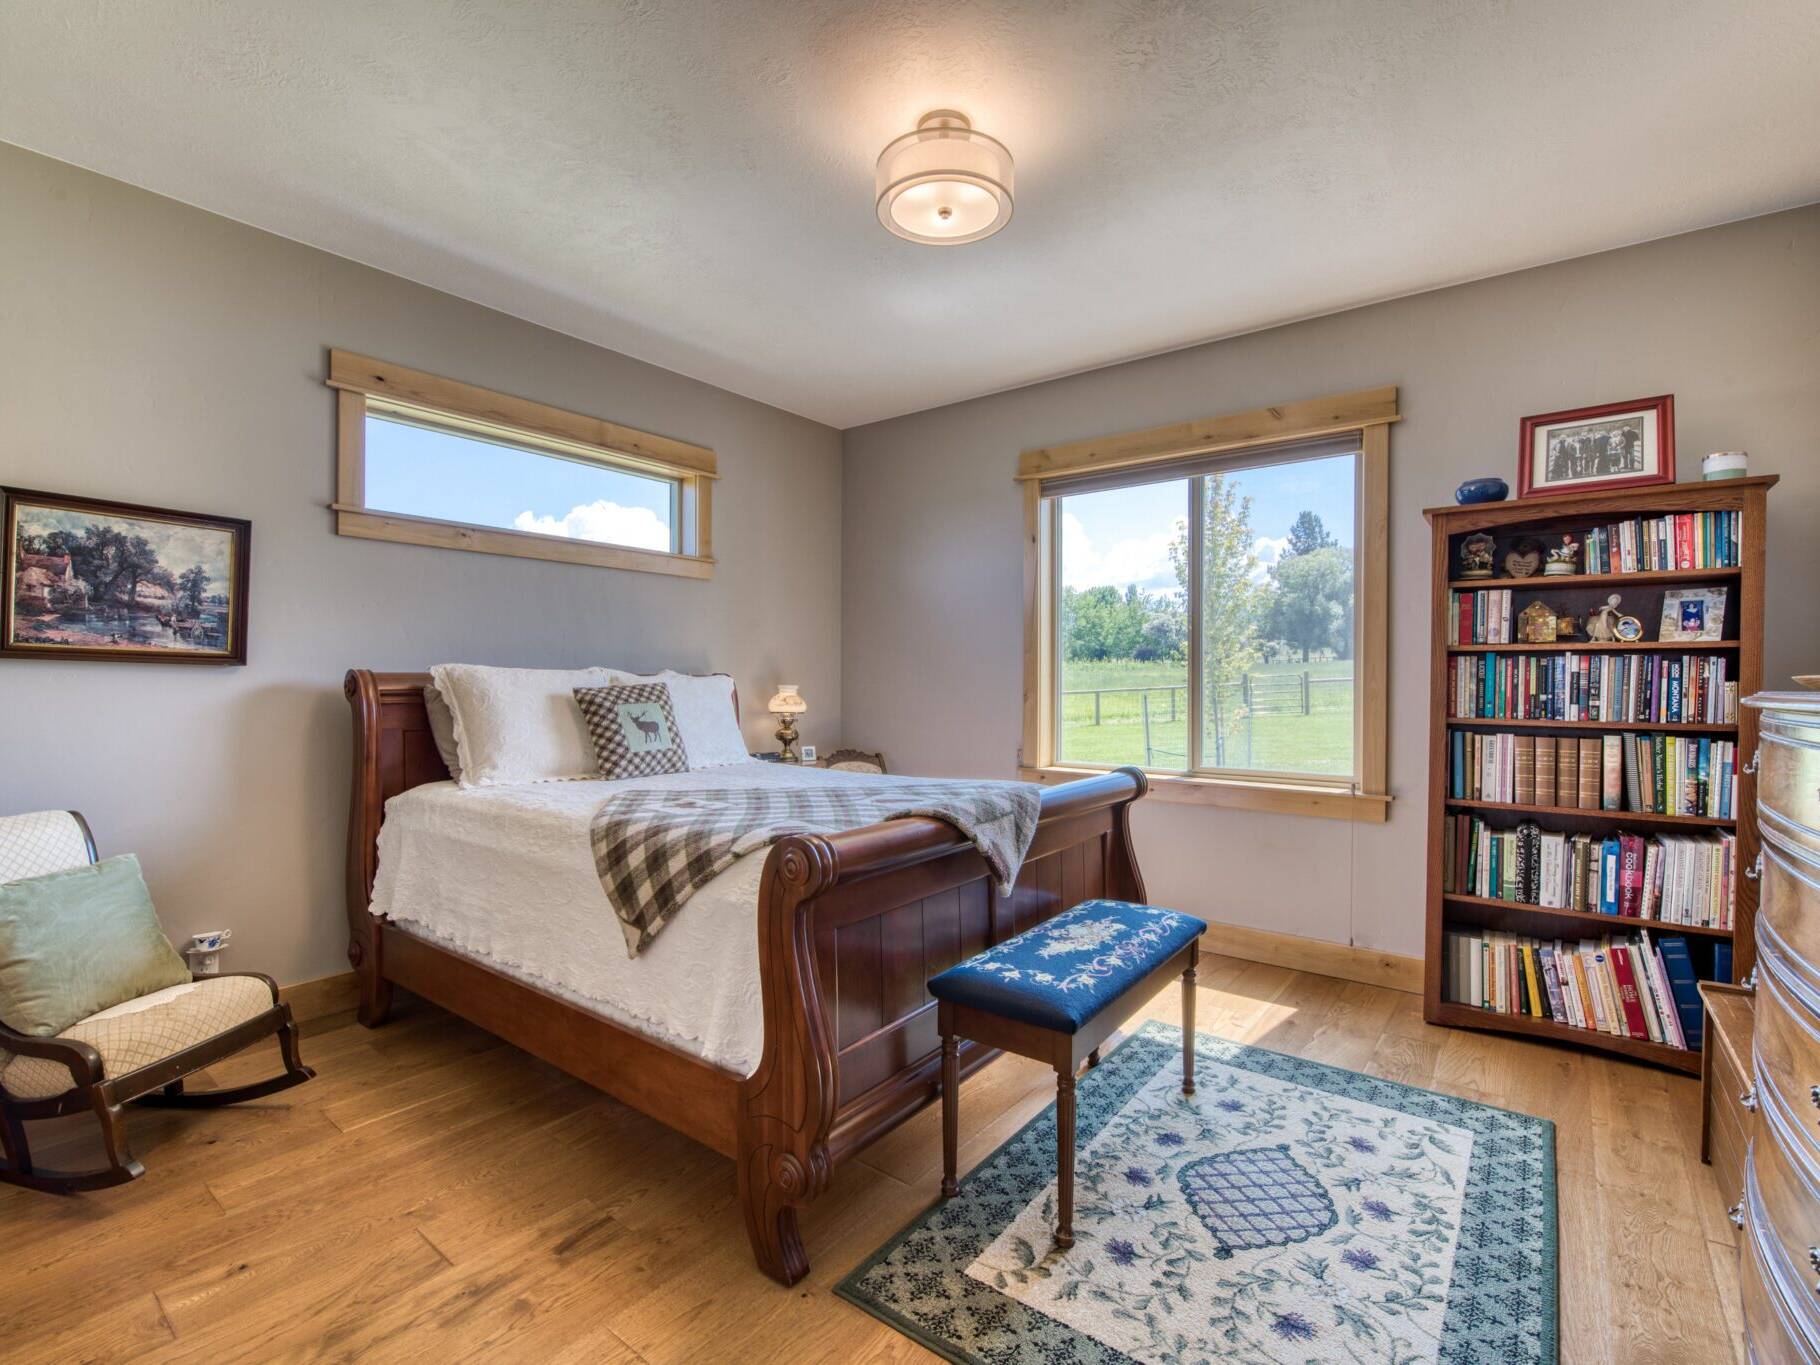 Guest bedroom in a custom home built by Big Sky Builders in Stevensville, MT